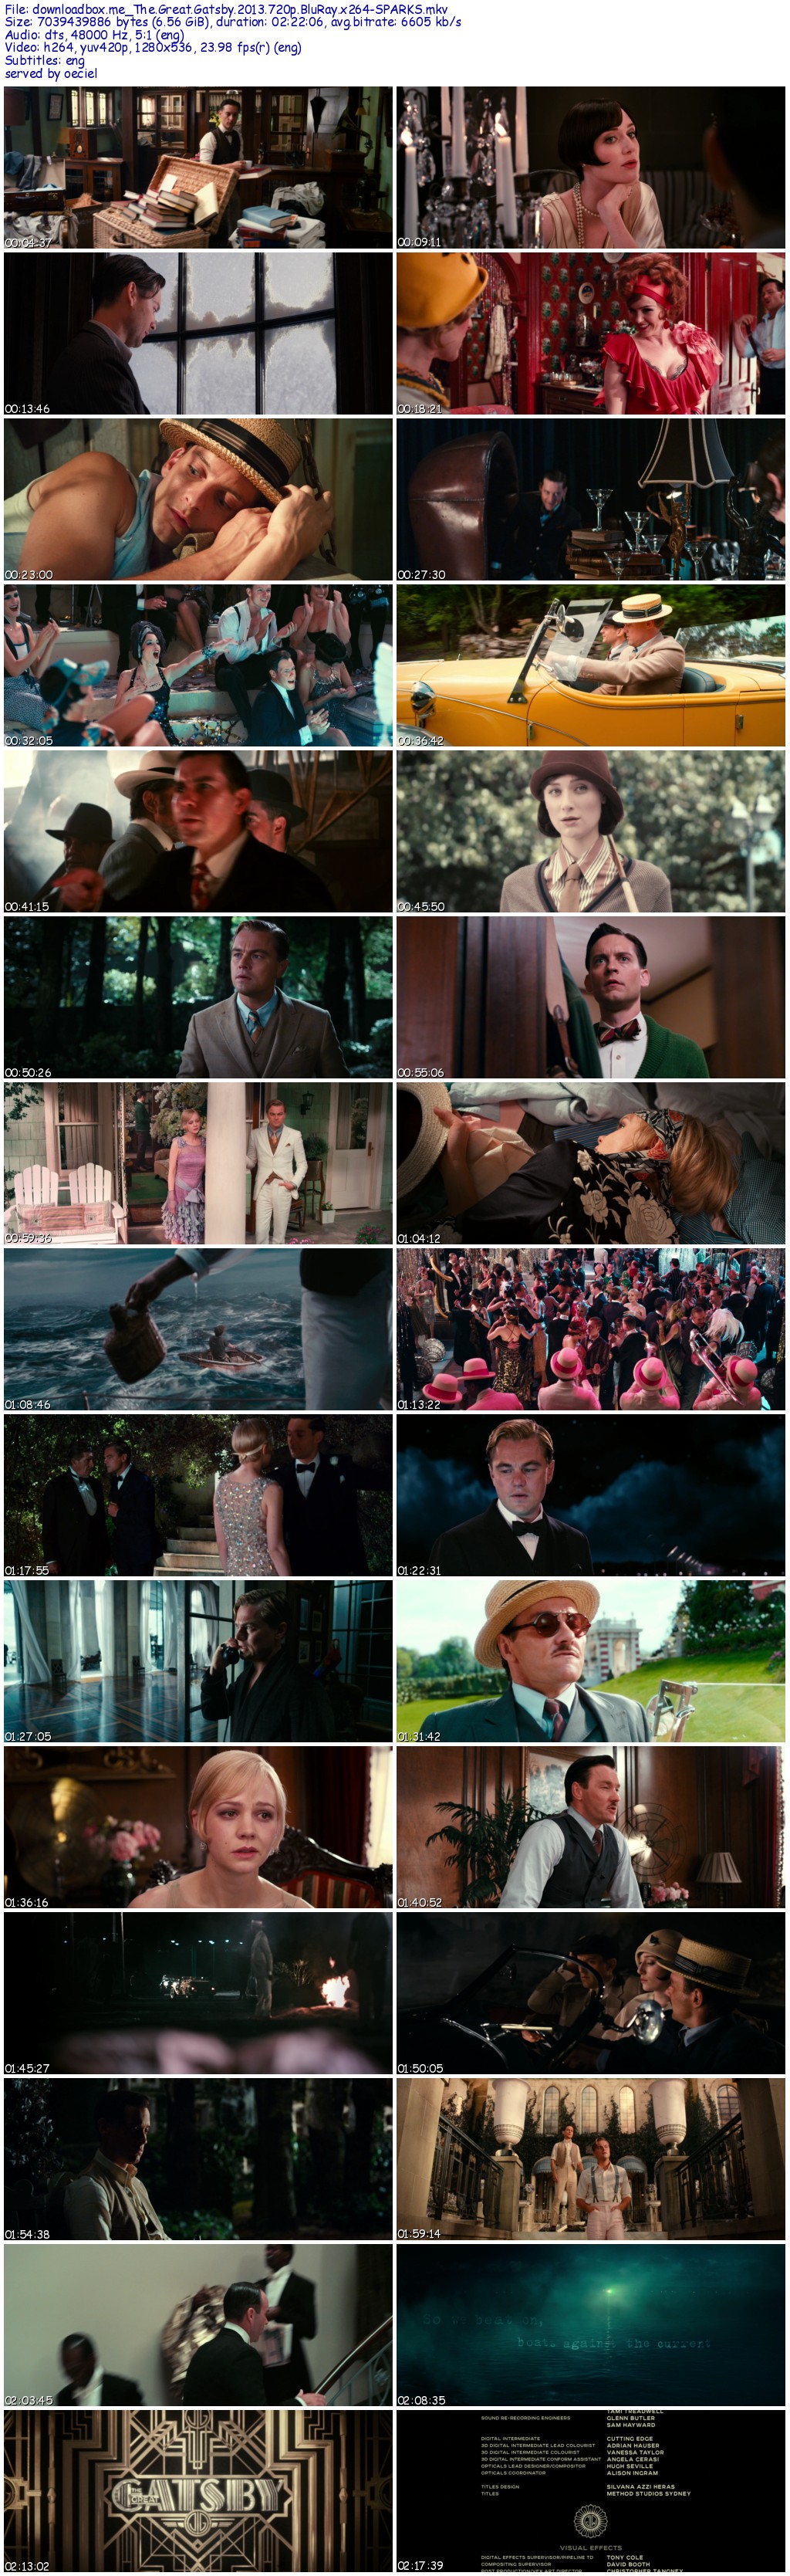 downloadbox.me_The.Great.Gatsby.2013.720p.BluRay.x264-SPARKS.jpg